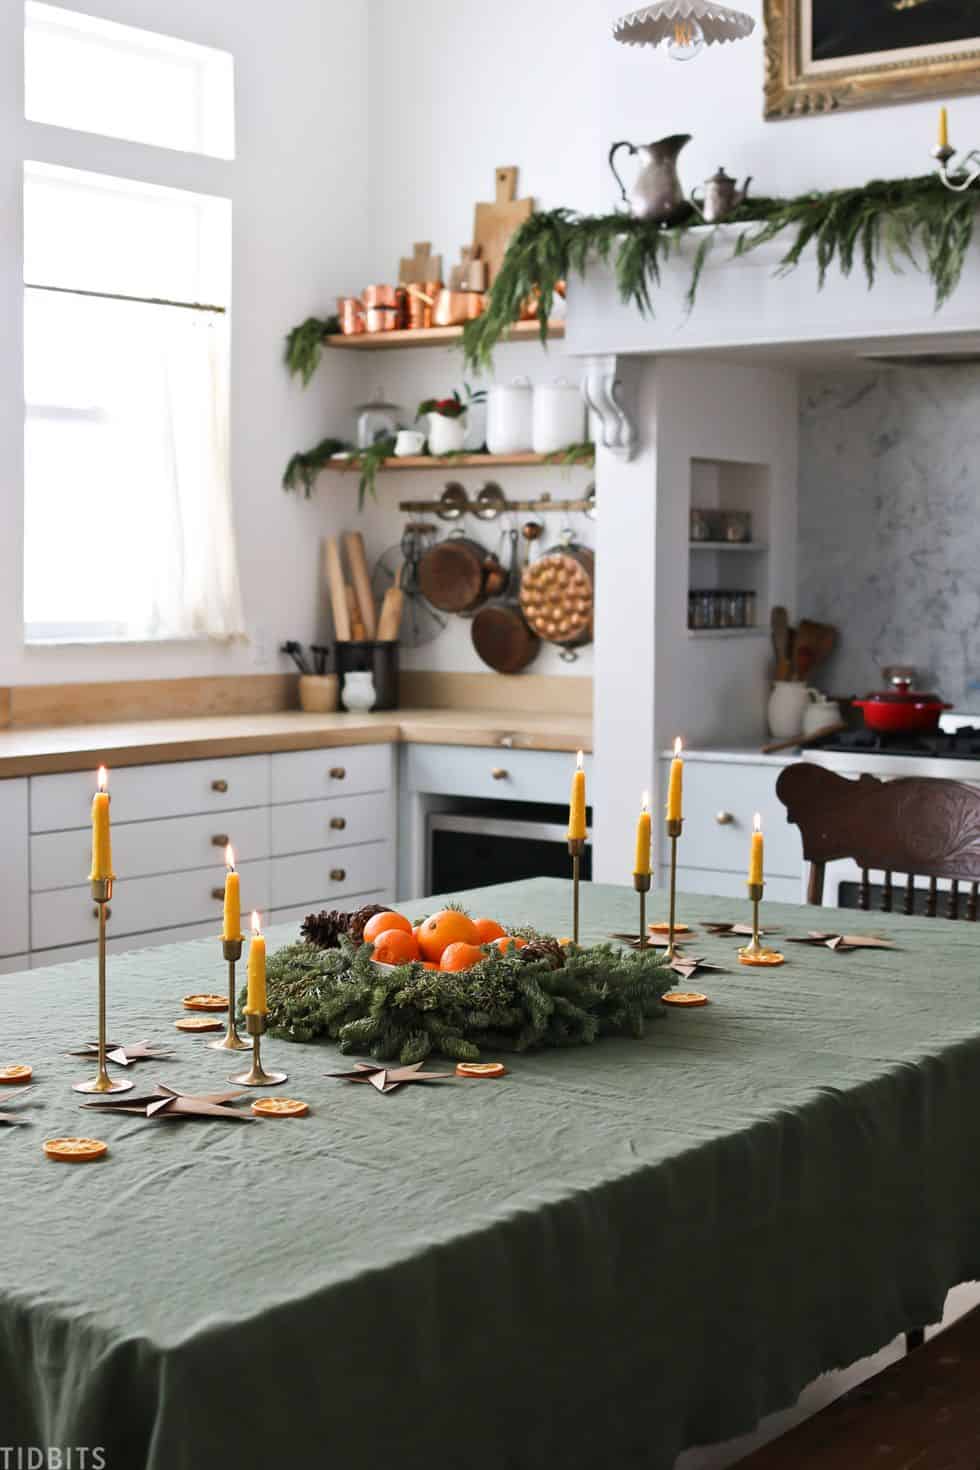 Decoración de mesas navideñas con candelabros hechos a mano